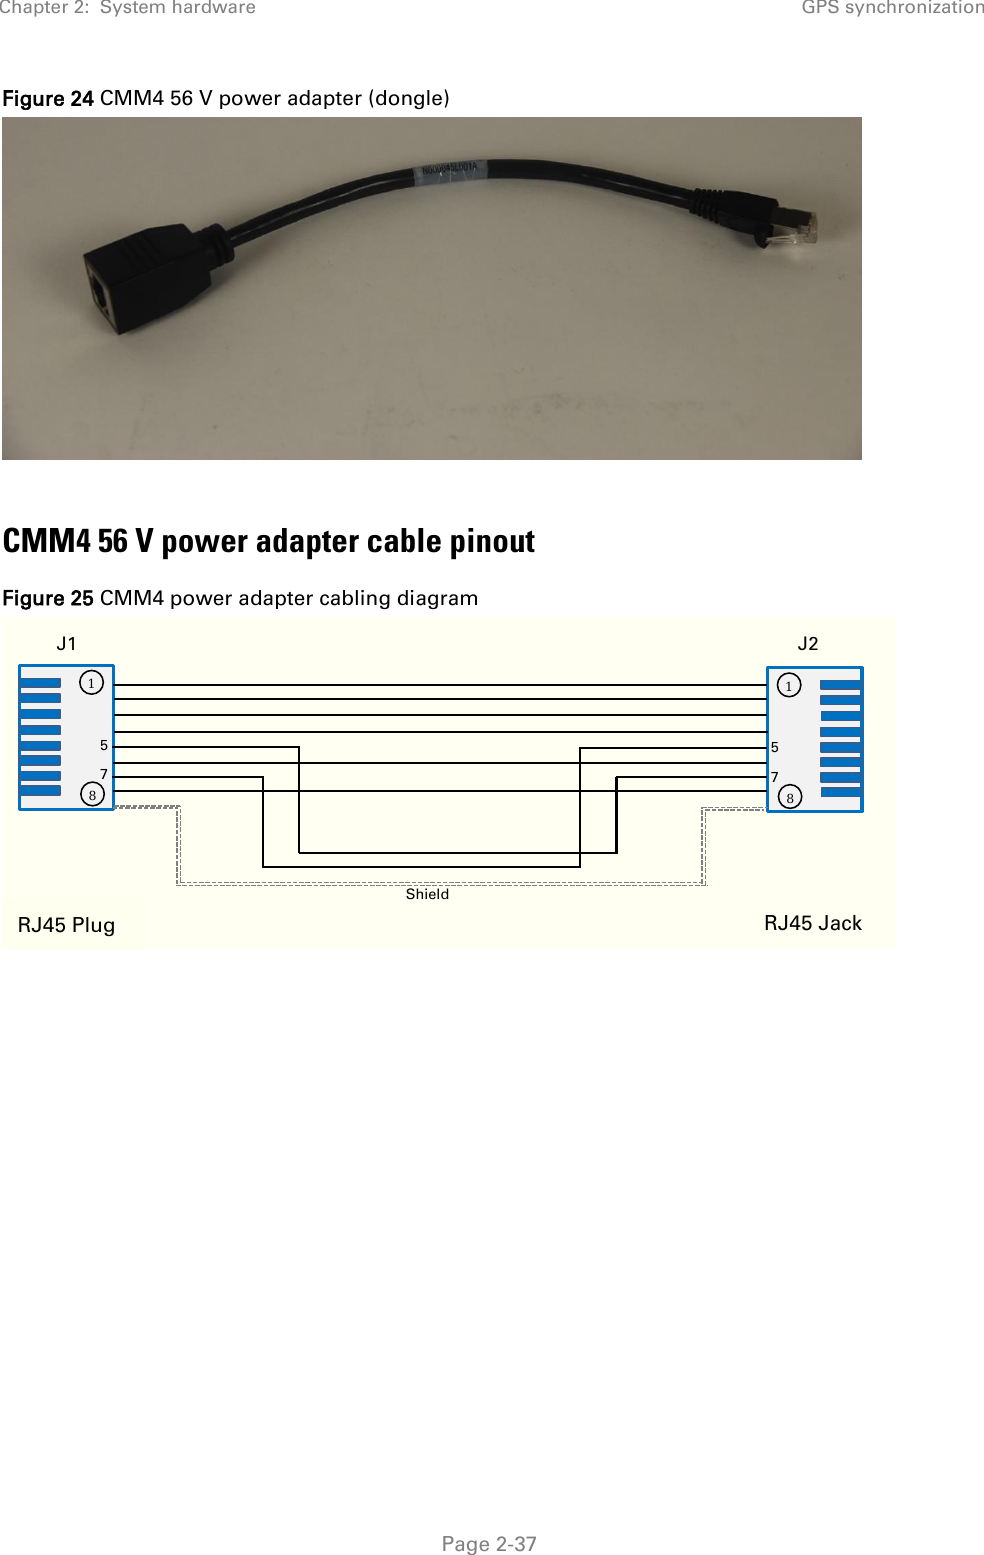 Chapter 2:  System hardware GPS synchronization   Page 2-37 Figure 24 CMM4 56 V power adapter (dongle)   CMM4 56 V power adapter cable pinout Figure 25 CMM4 power adapter cabling diagram   1 8 1 8 J1 J2 RJ45 Plug RJ45 Jack 5 7 5 7 Shield 